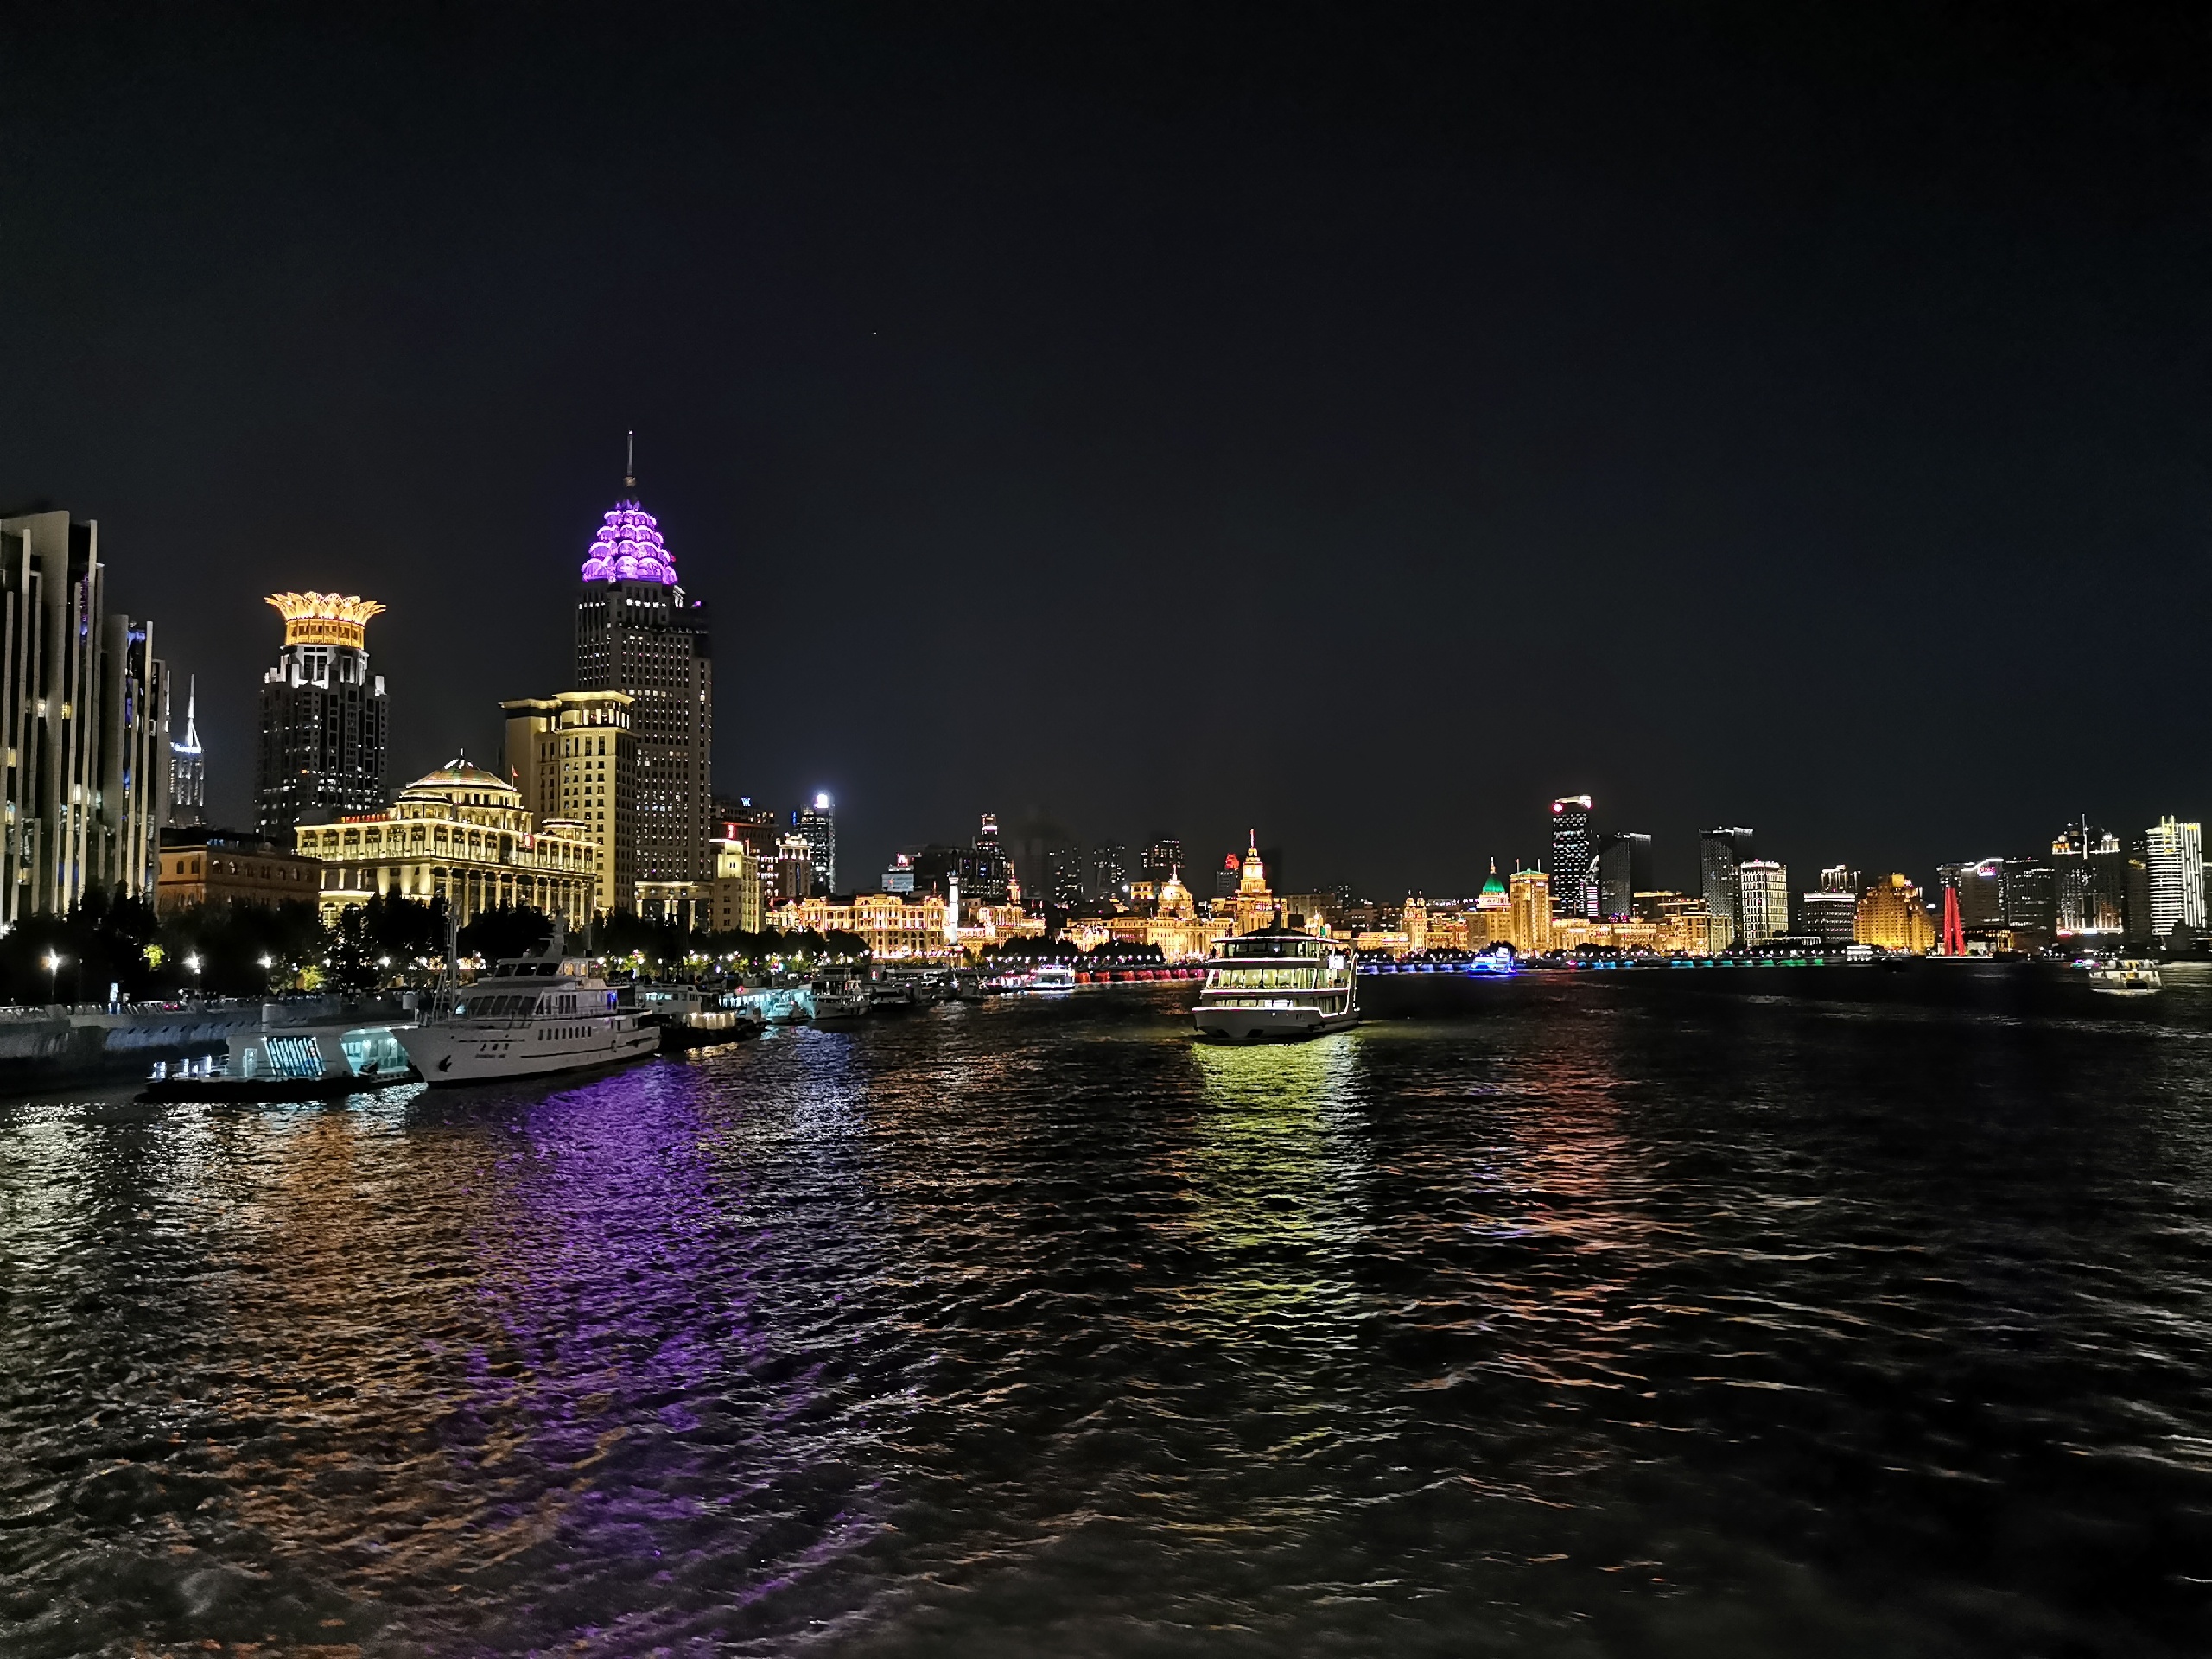 Shanghai Shiliupu Pier